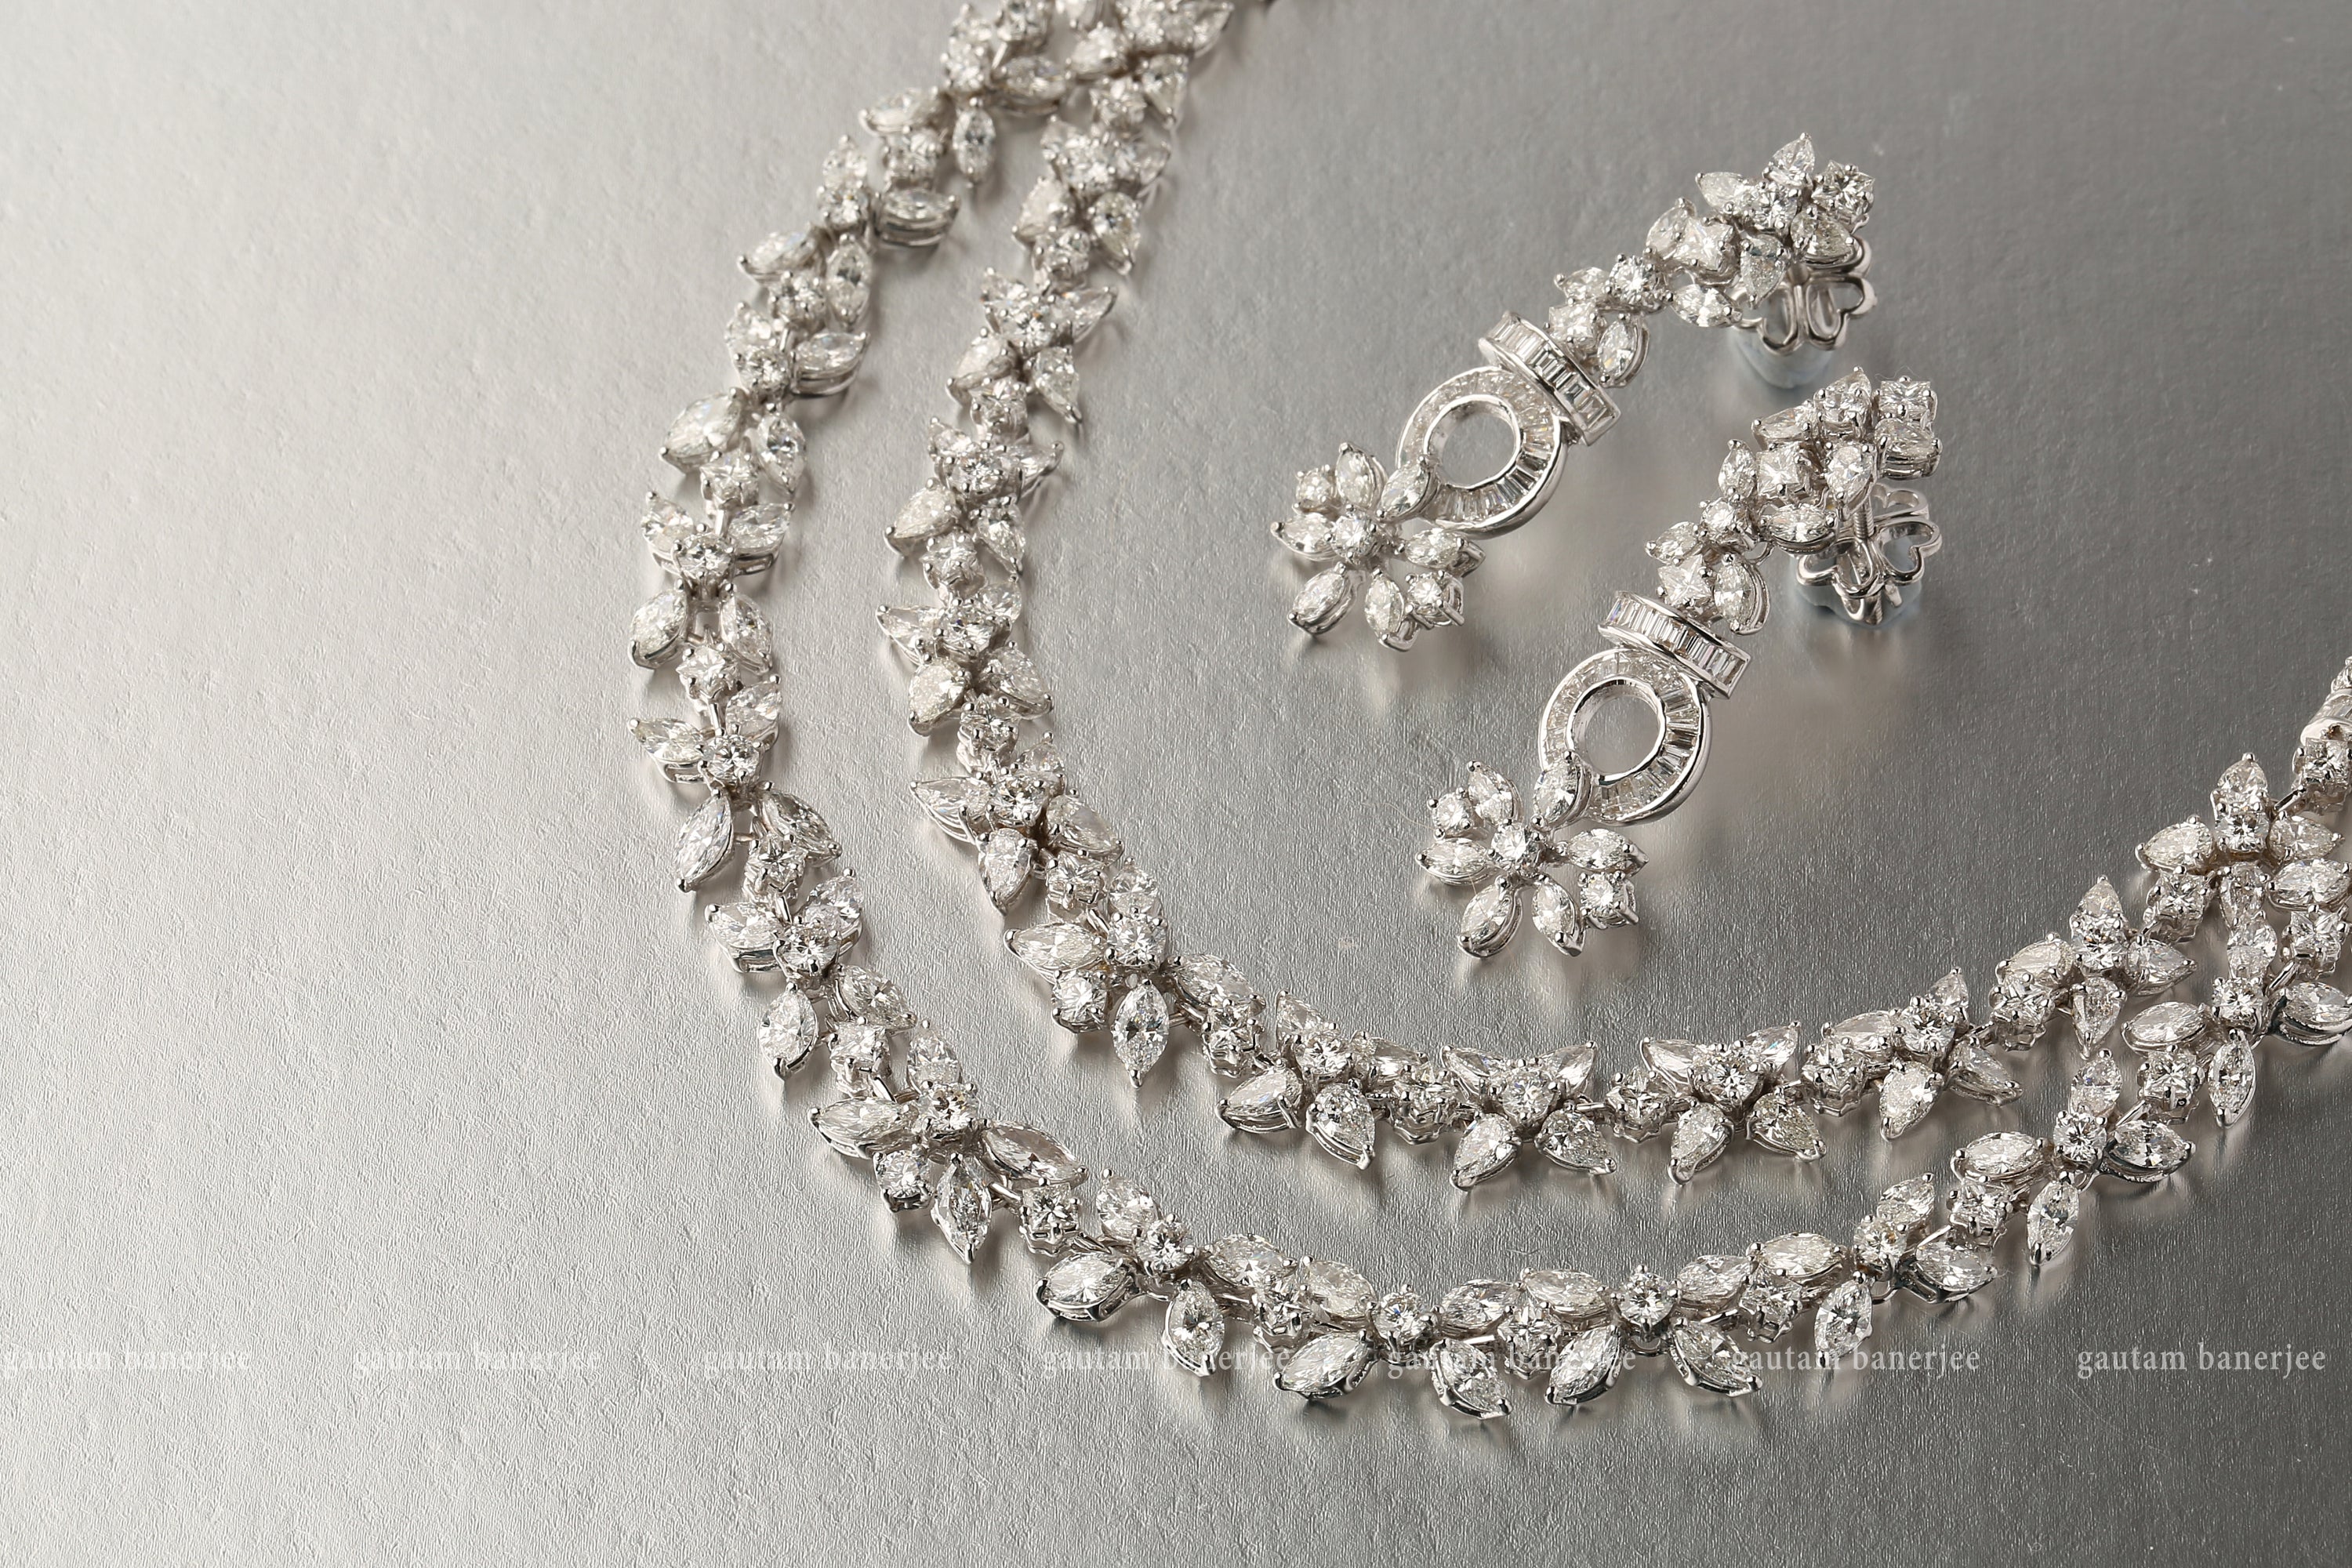 Catch Your Fancy: Diamond Pendants Go Beyond Round |